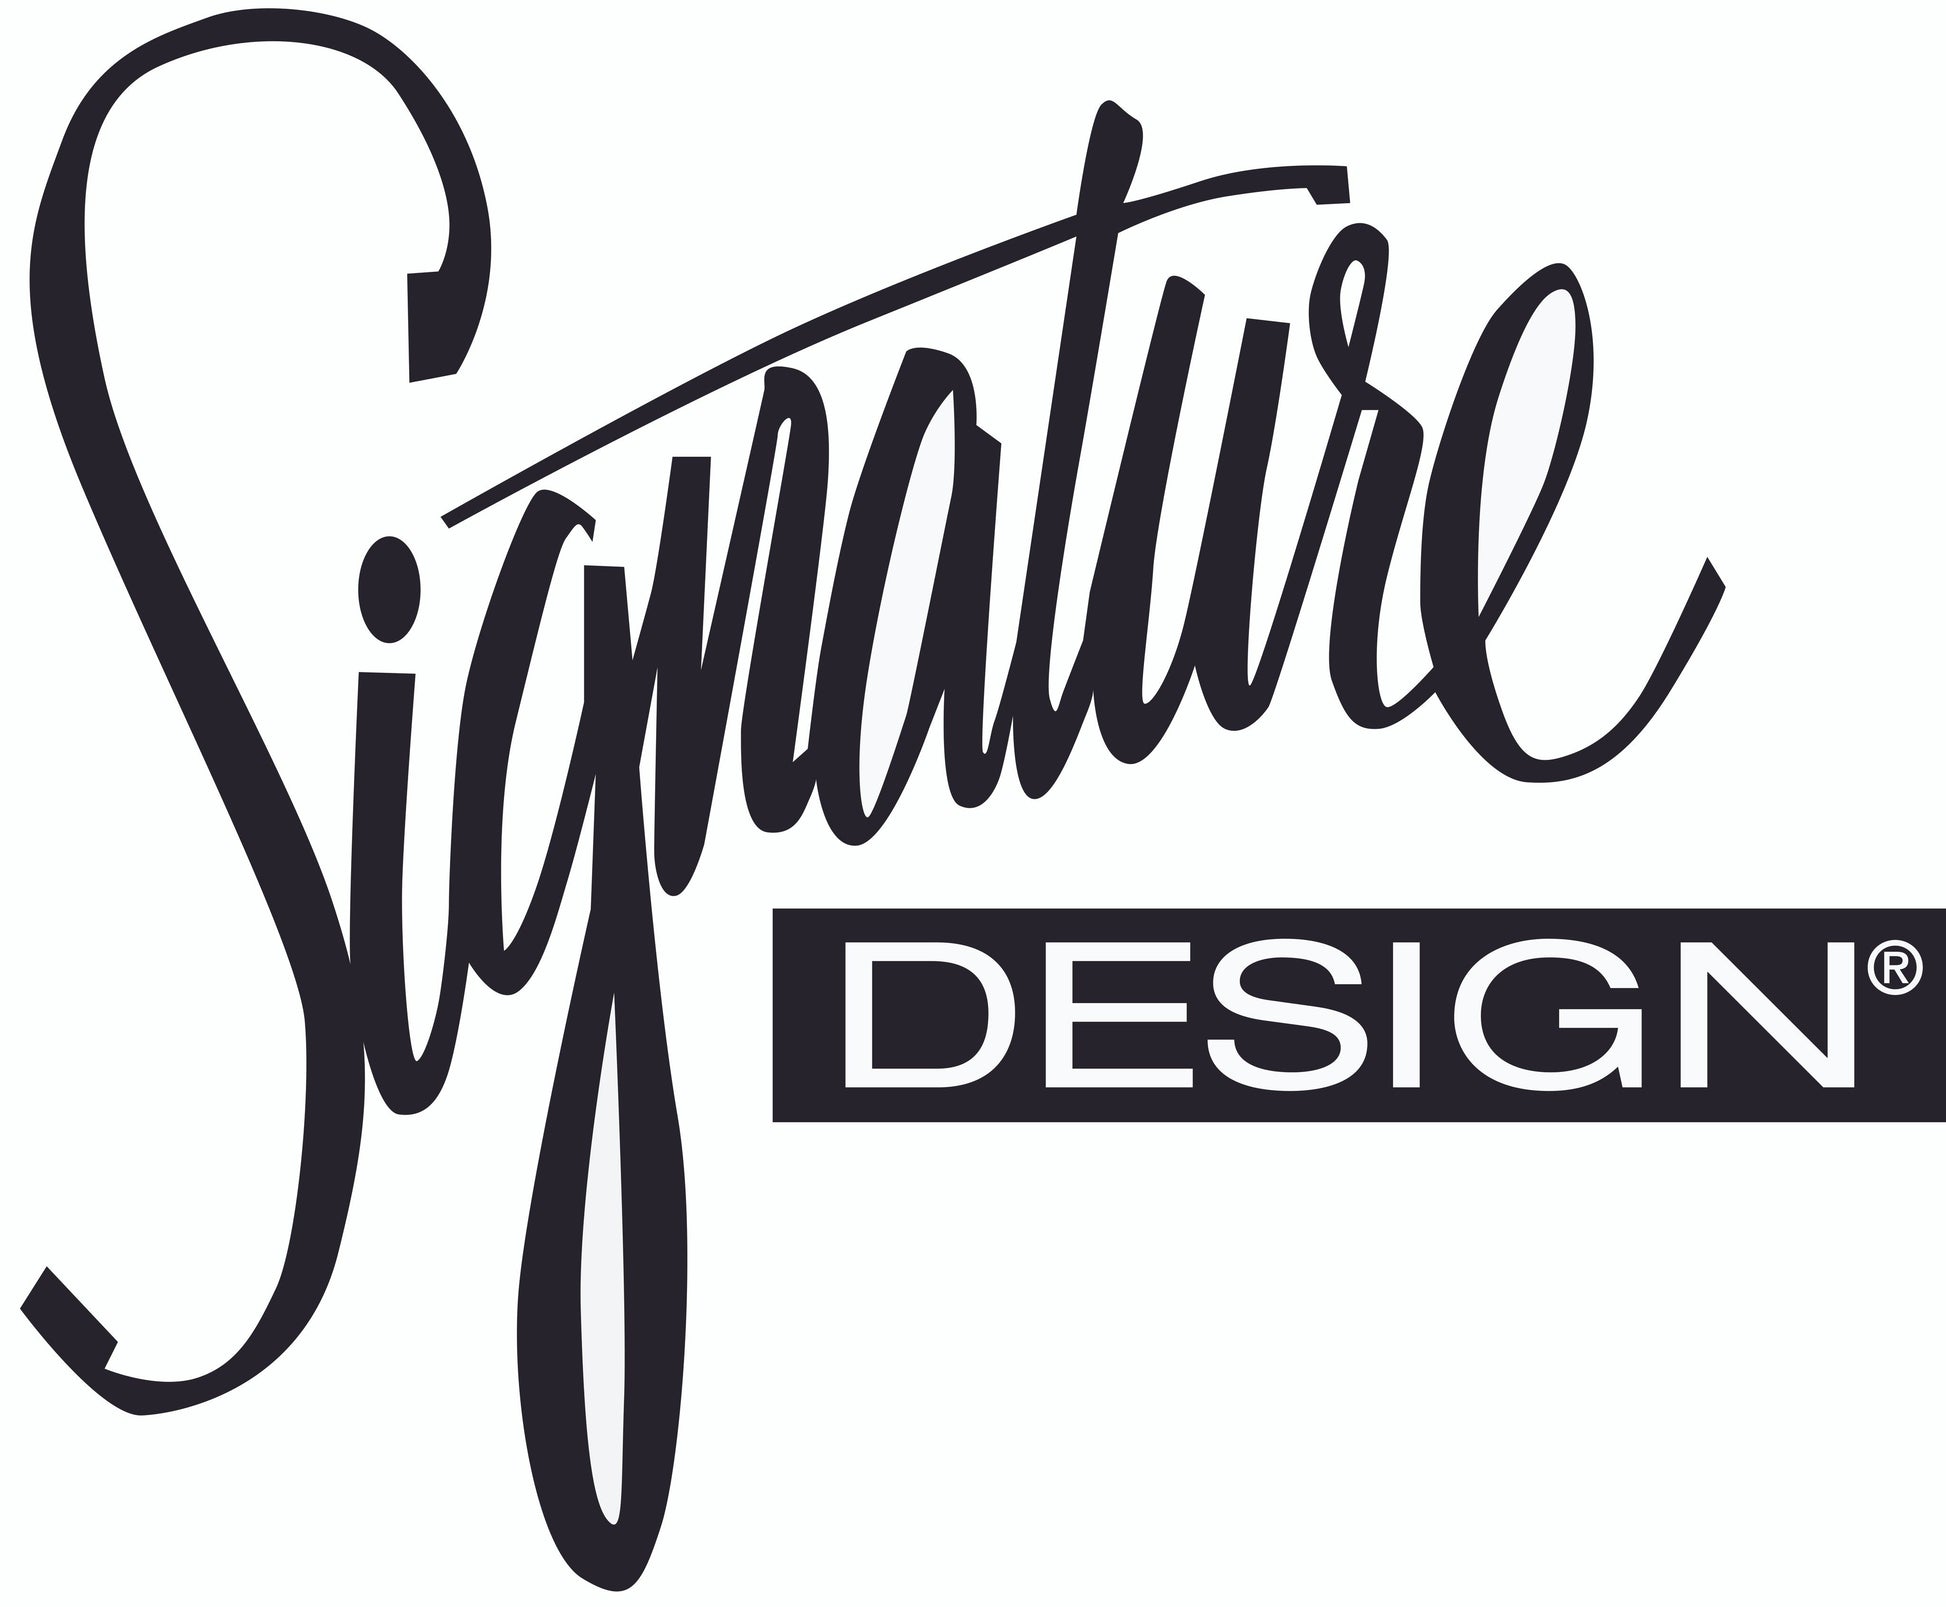 Willamen Sofa and Loveseat Signature Design by Ashley®